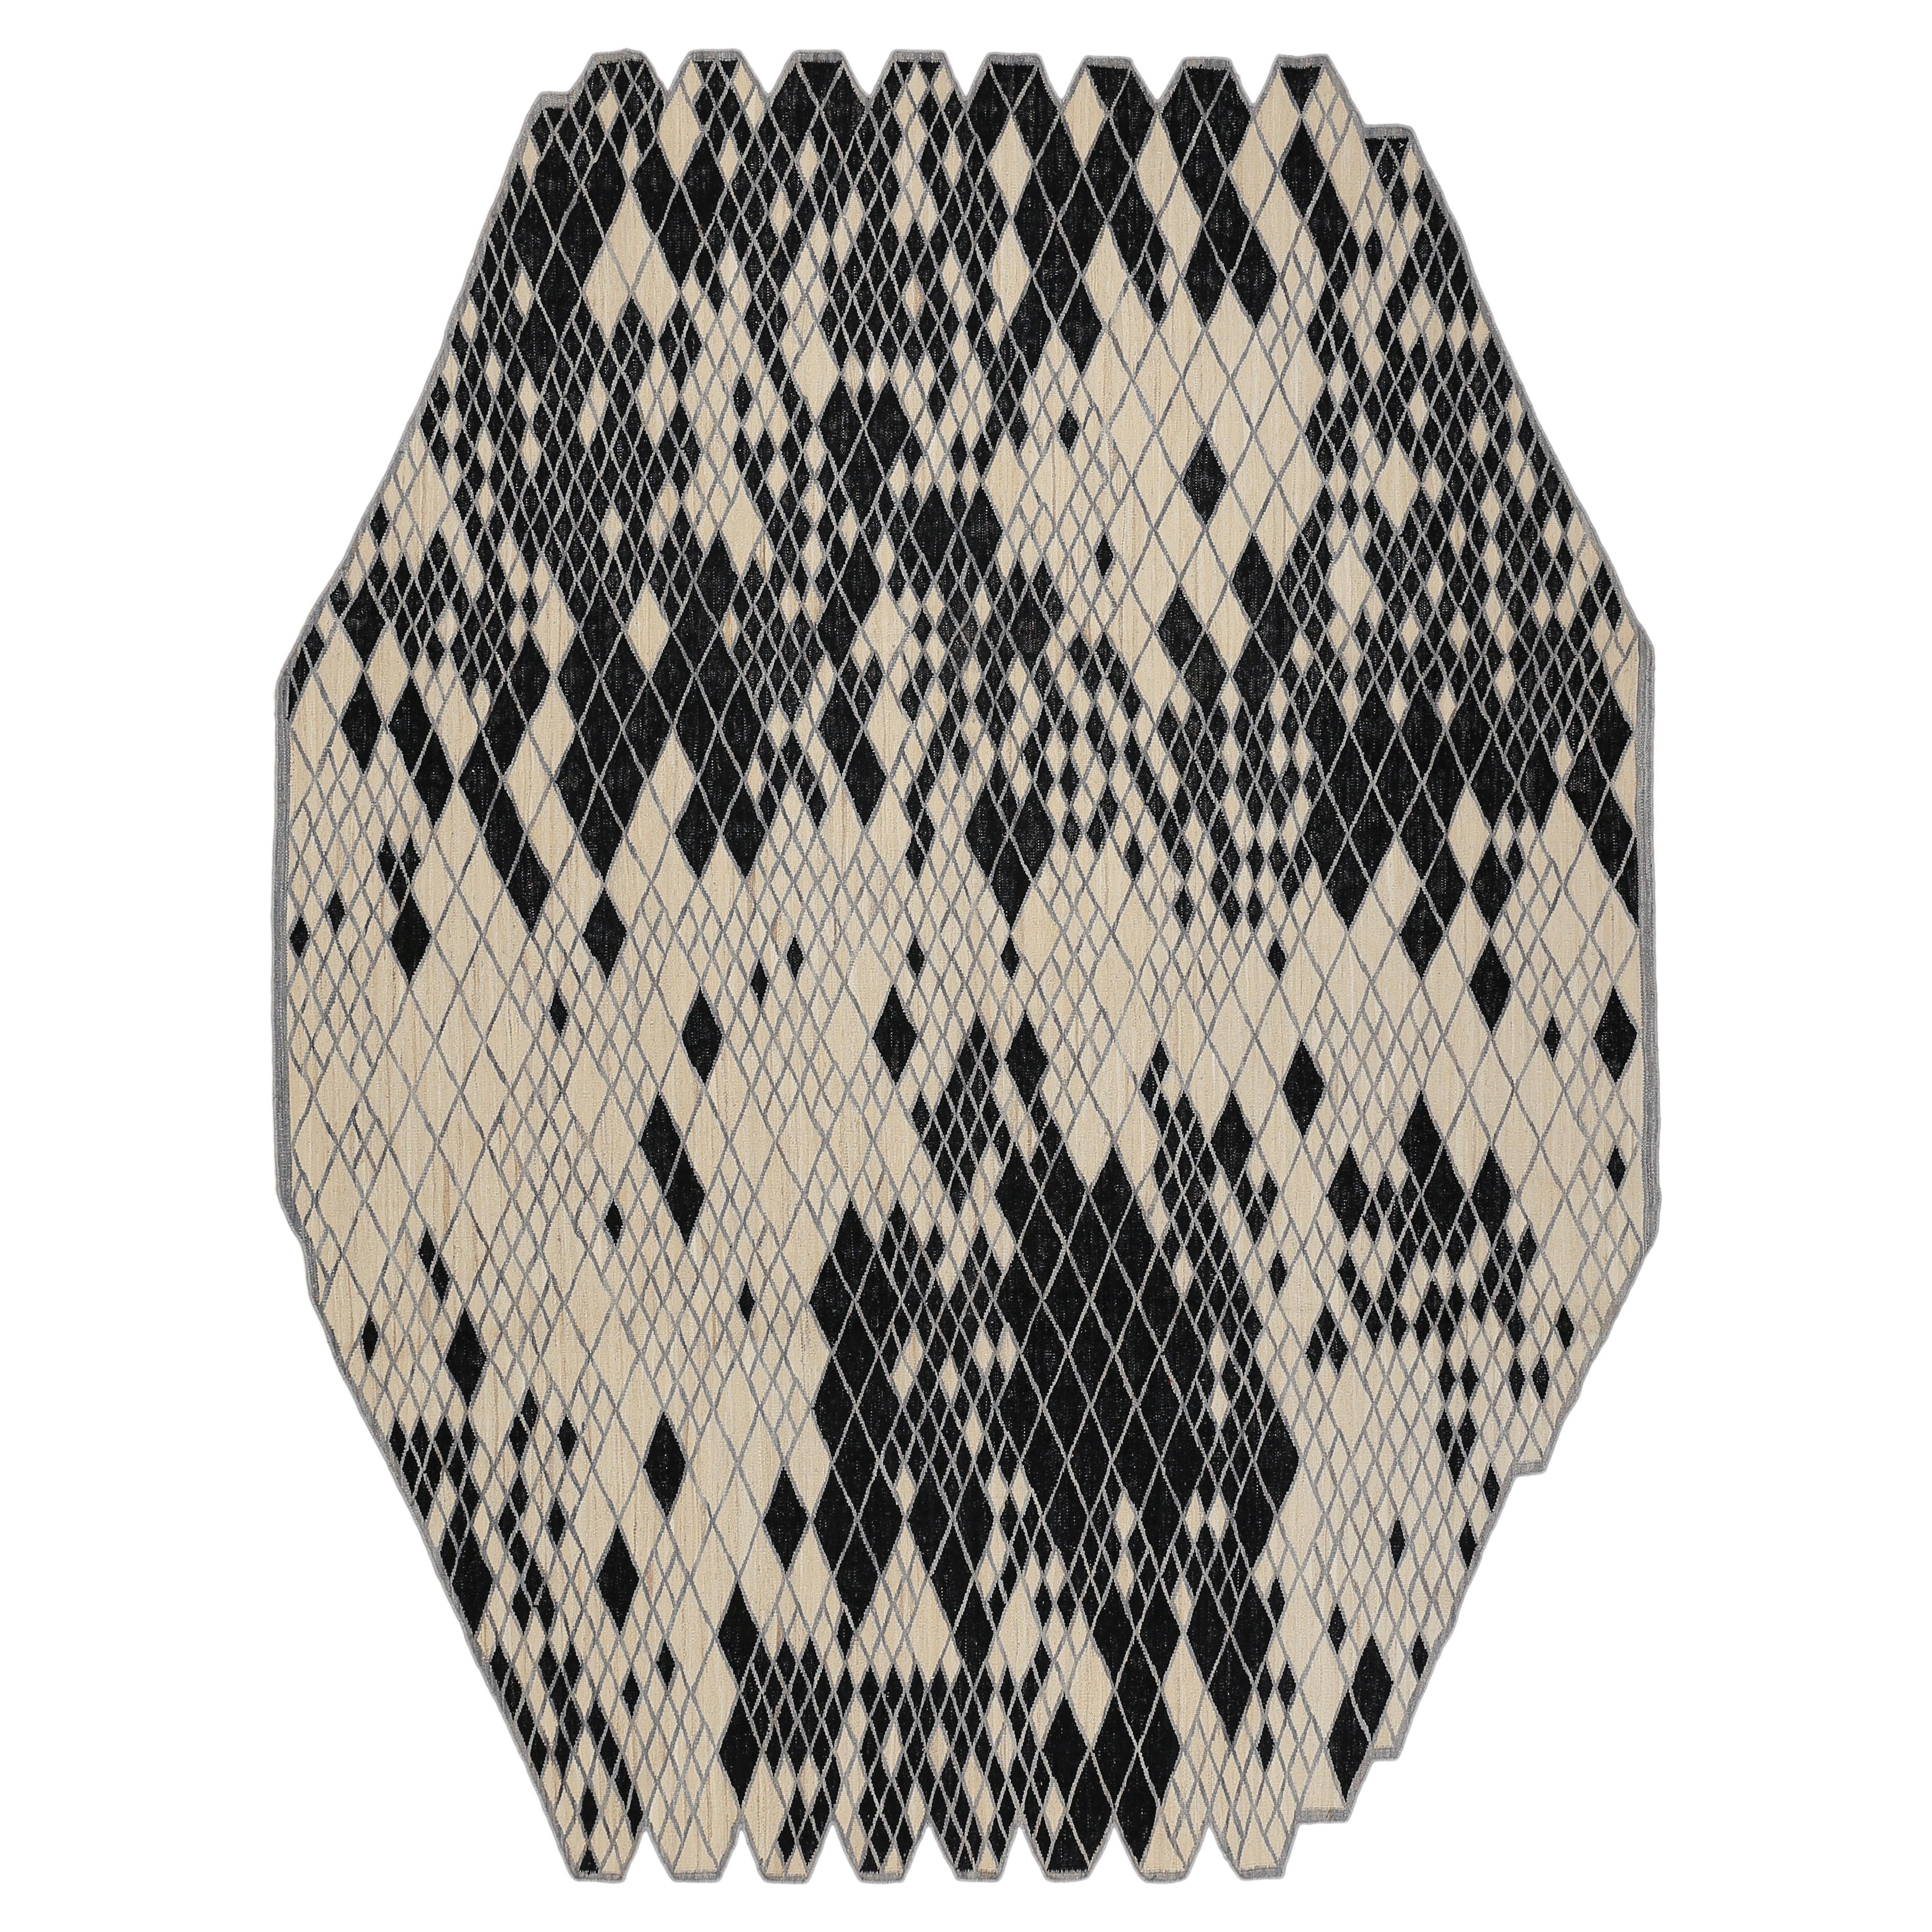 Modernist Octagonal Shaped Geometric Kilim Rug in White, Grey and Black